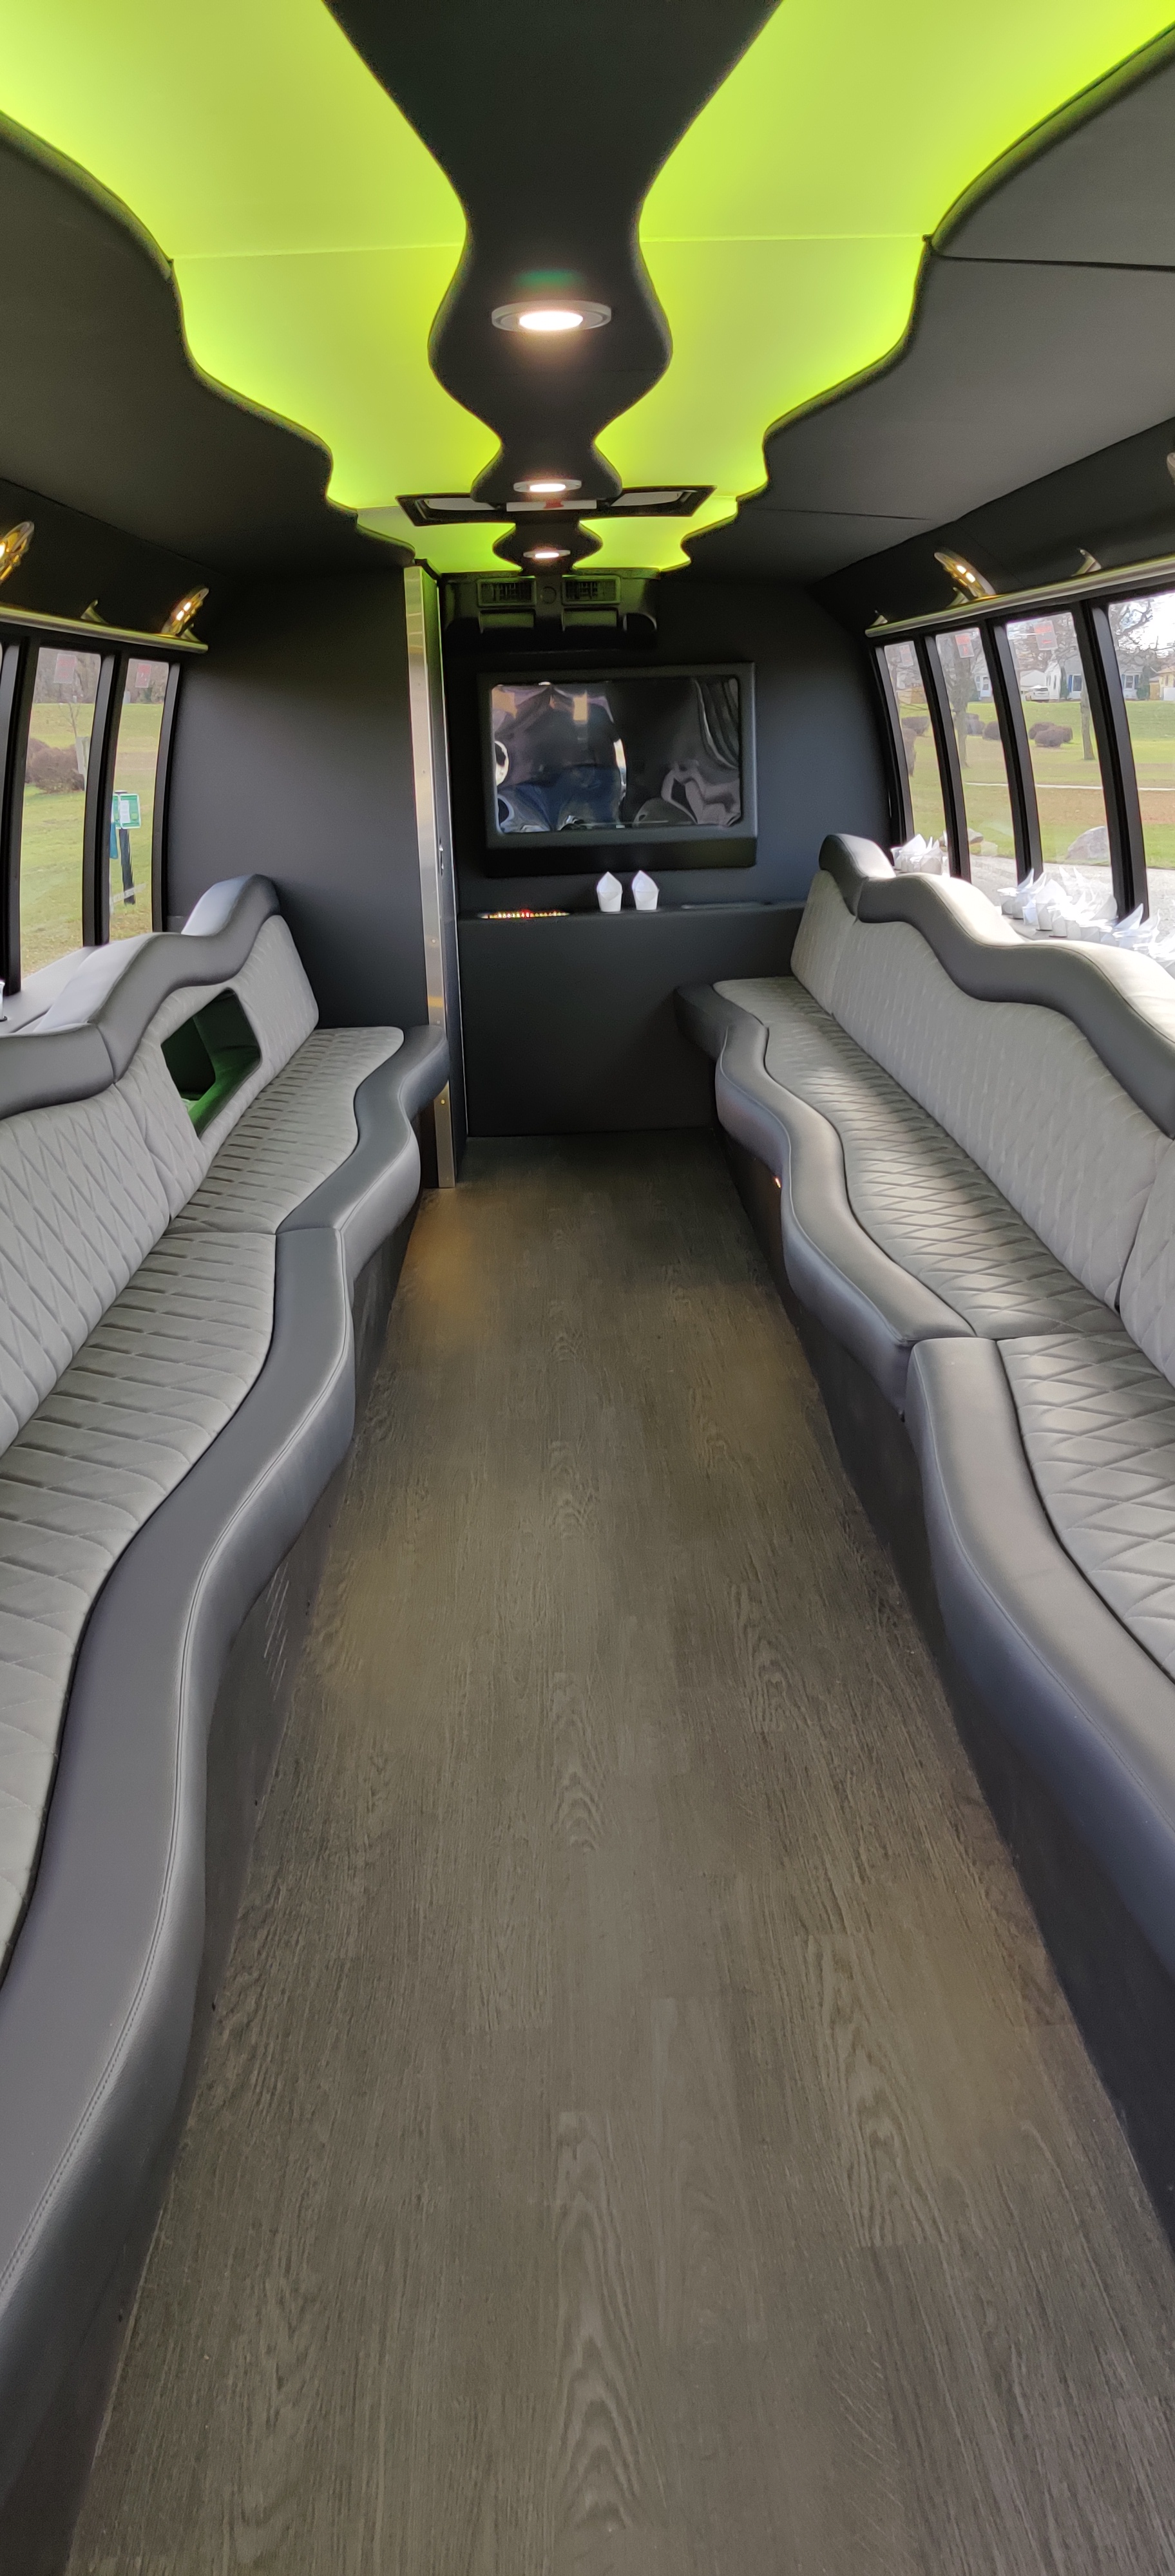 28-2 Passenger Luxury Limo Bus Interior 2